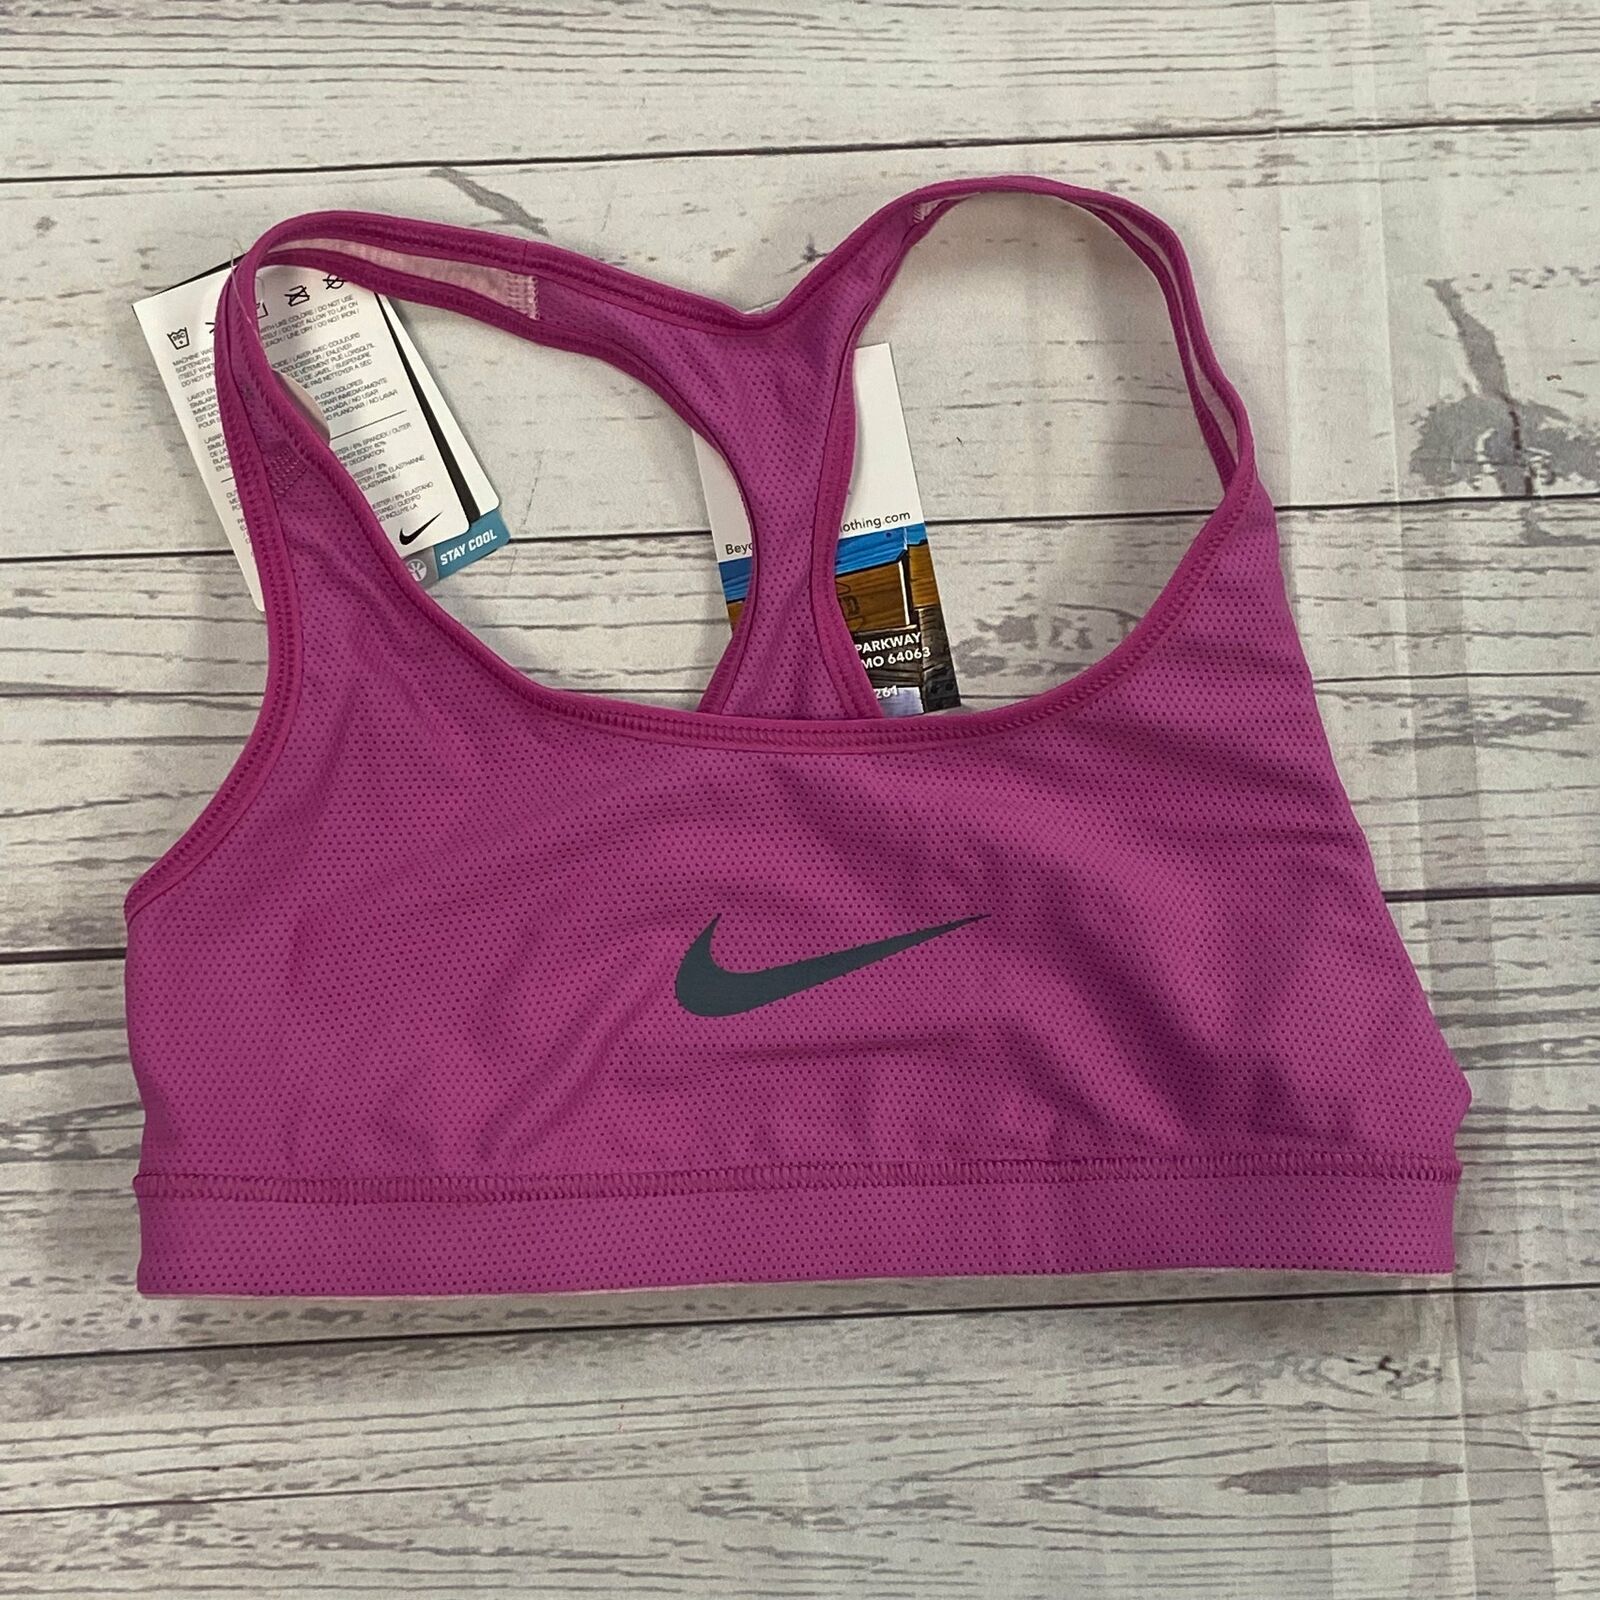 Nike Women's Pink Sports Bras & Underwear with Cash Back